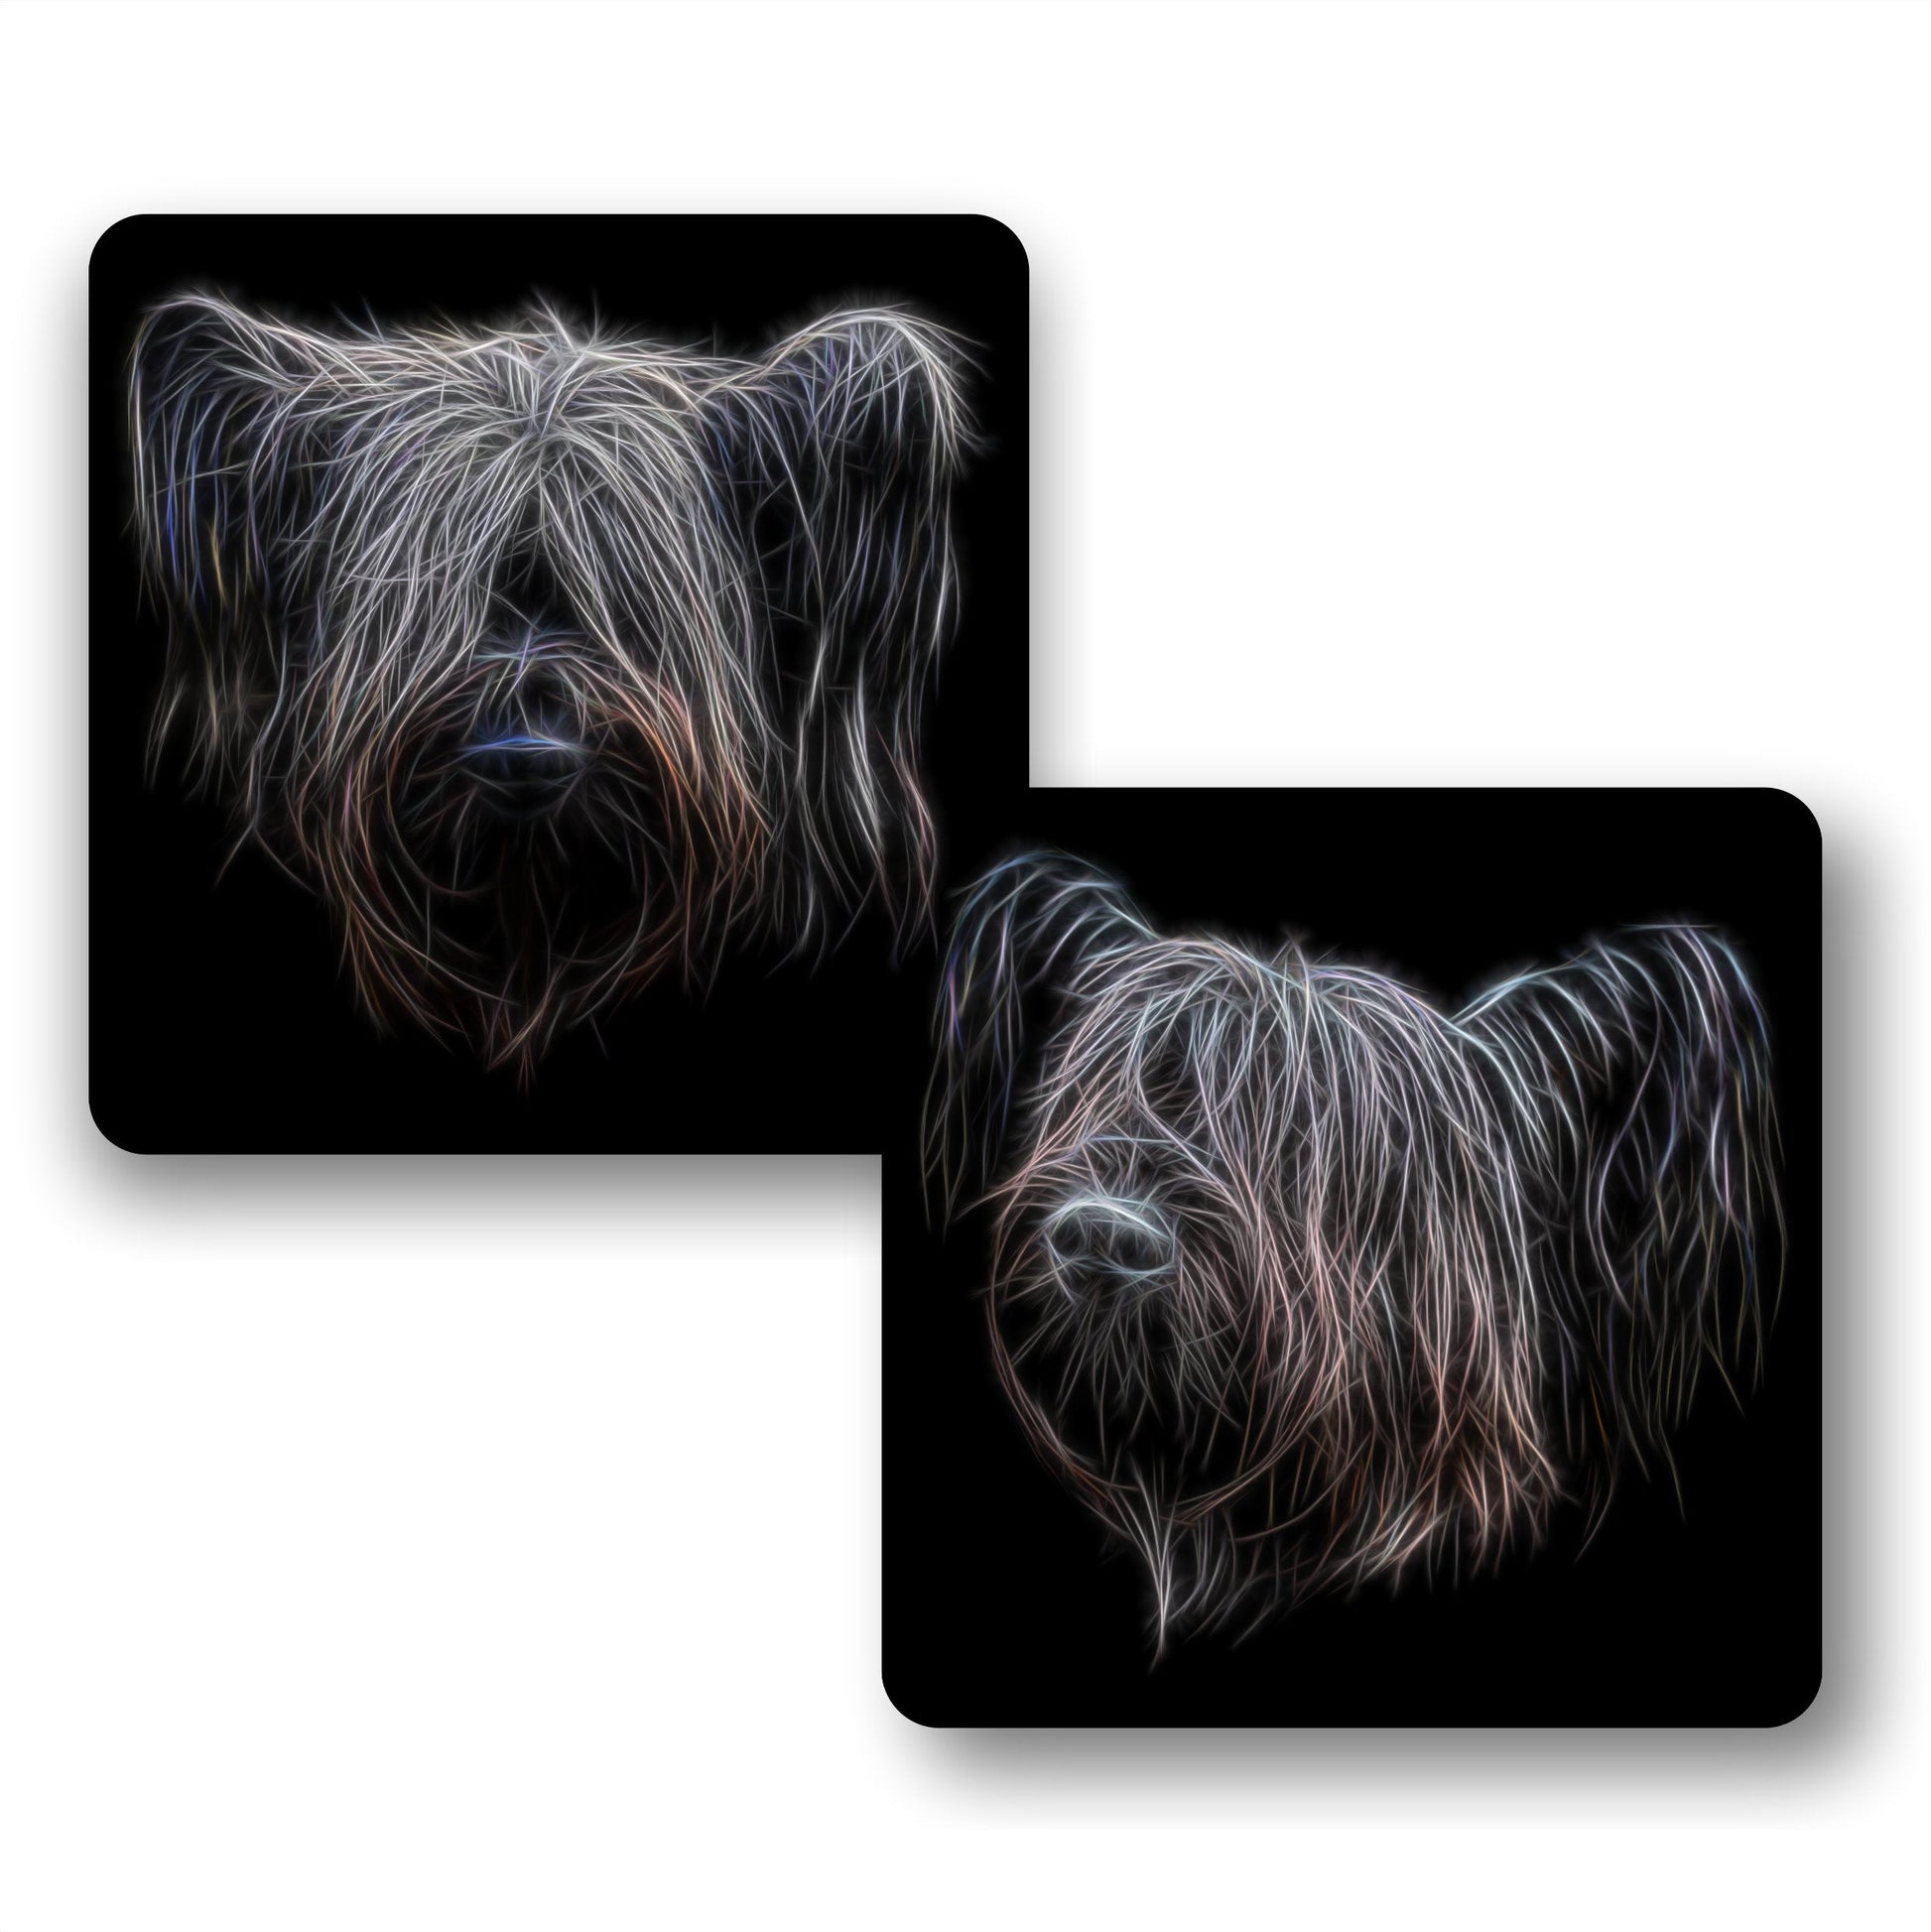 Skye Terrier Coasters, Set of 2, with Stunning Fractal Art Design.